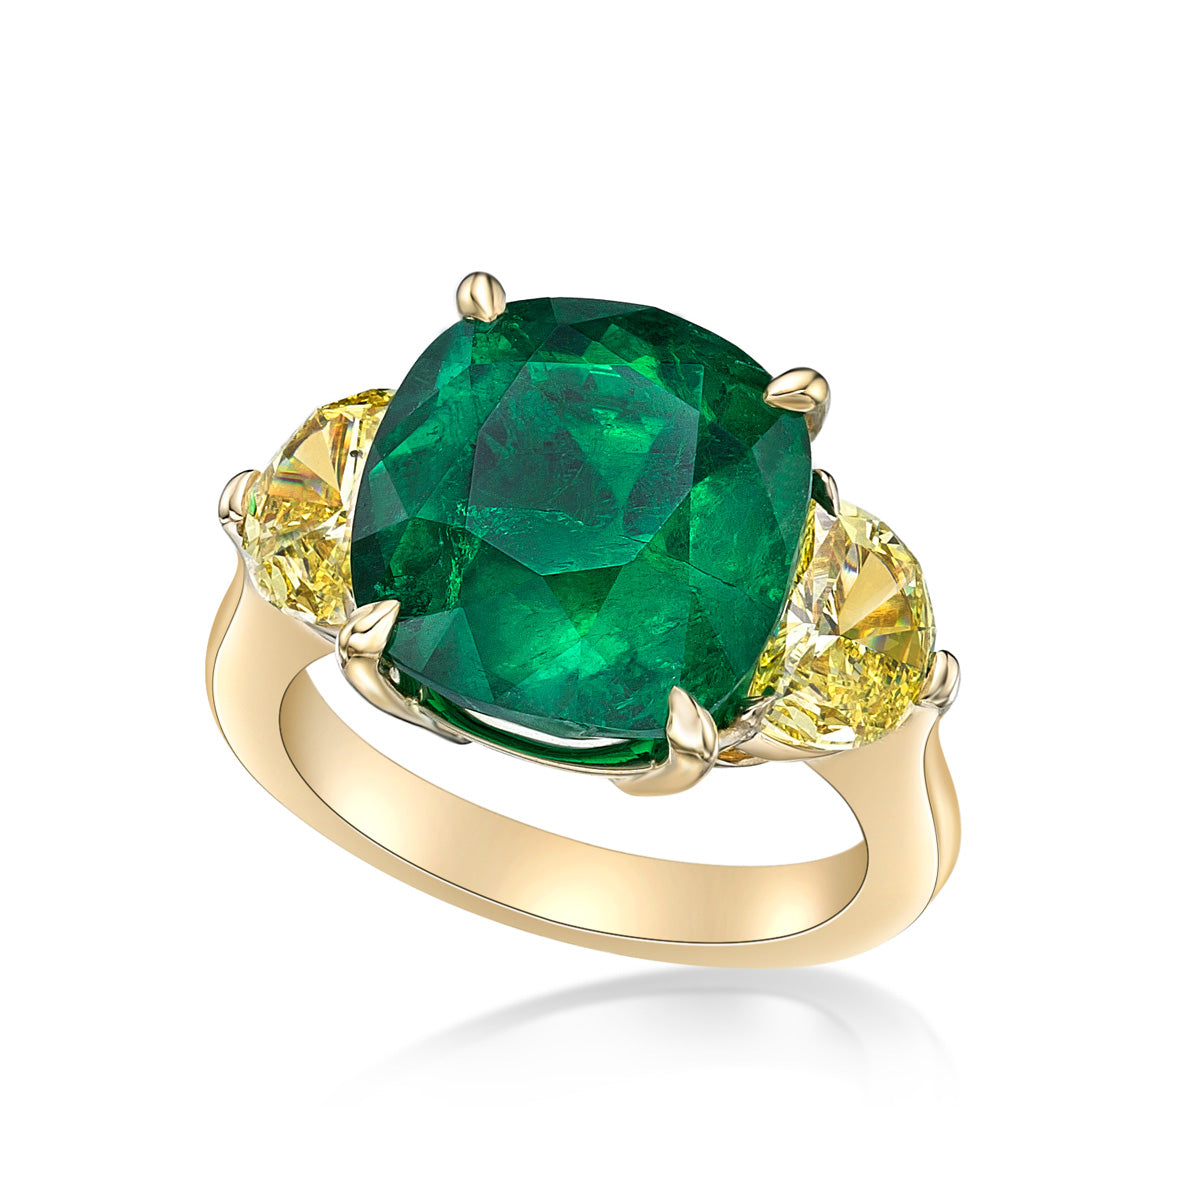 6.48ct Cushion Cut Colombian Green Emerald in a handmade 18K Yellow Gold 3-stone setting with 75pt half-moon Yellow diamond sidestones